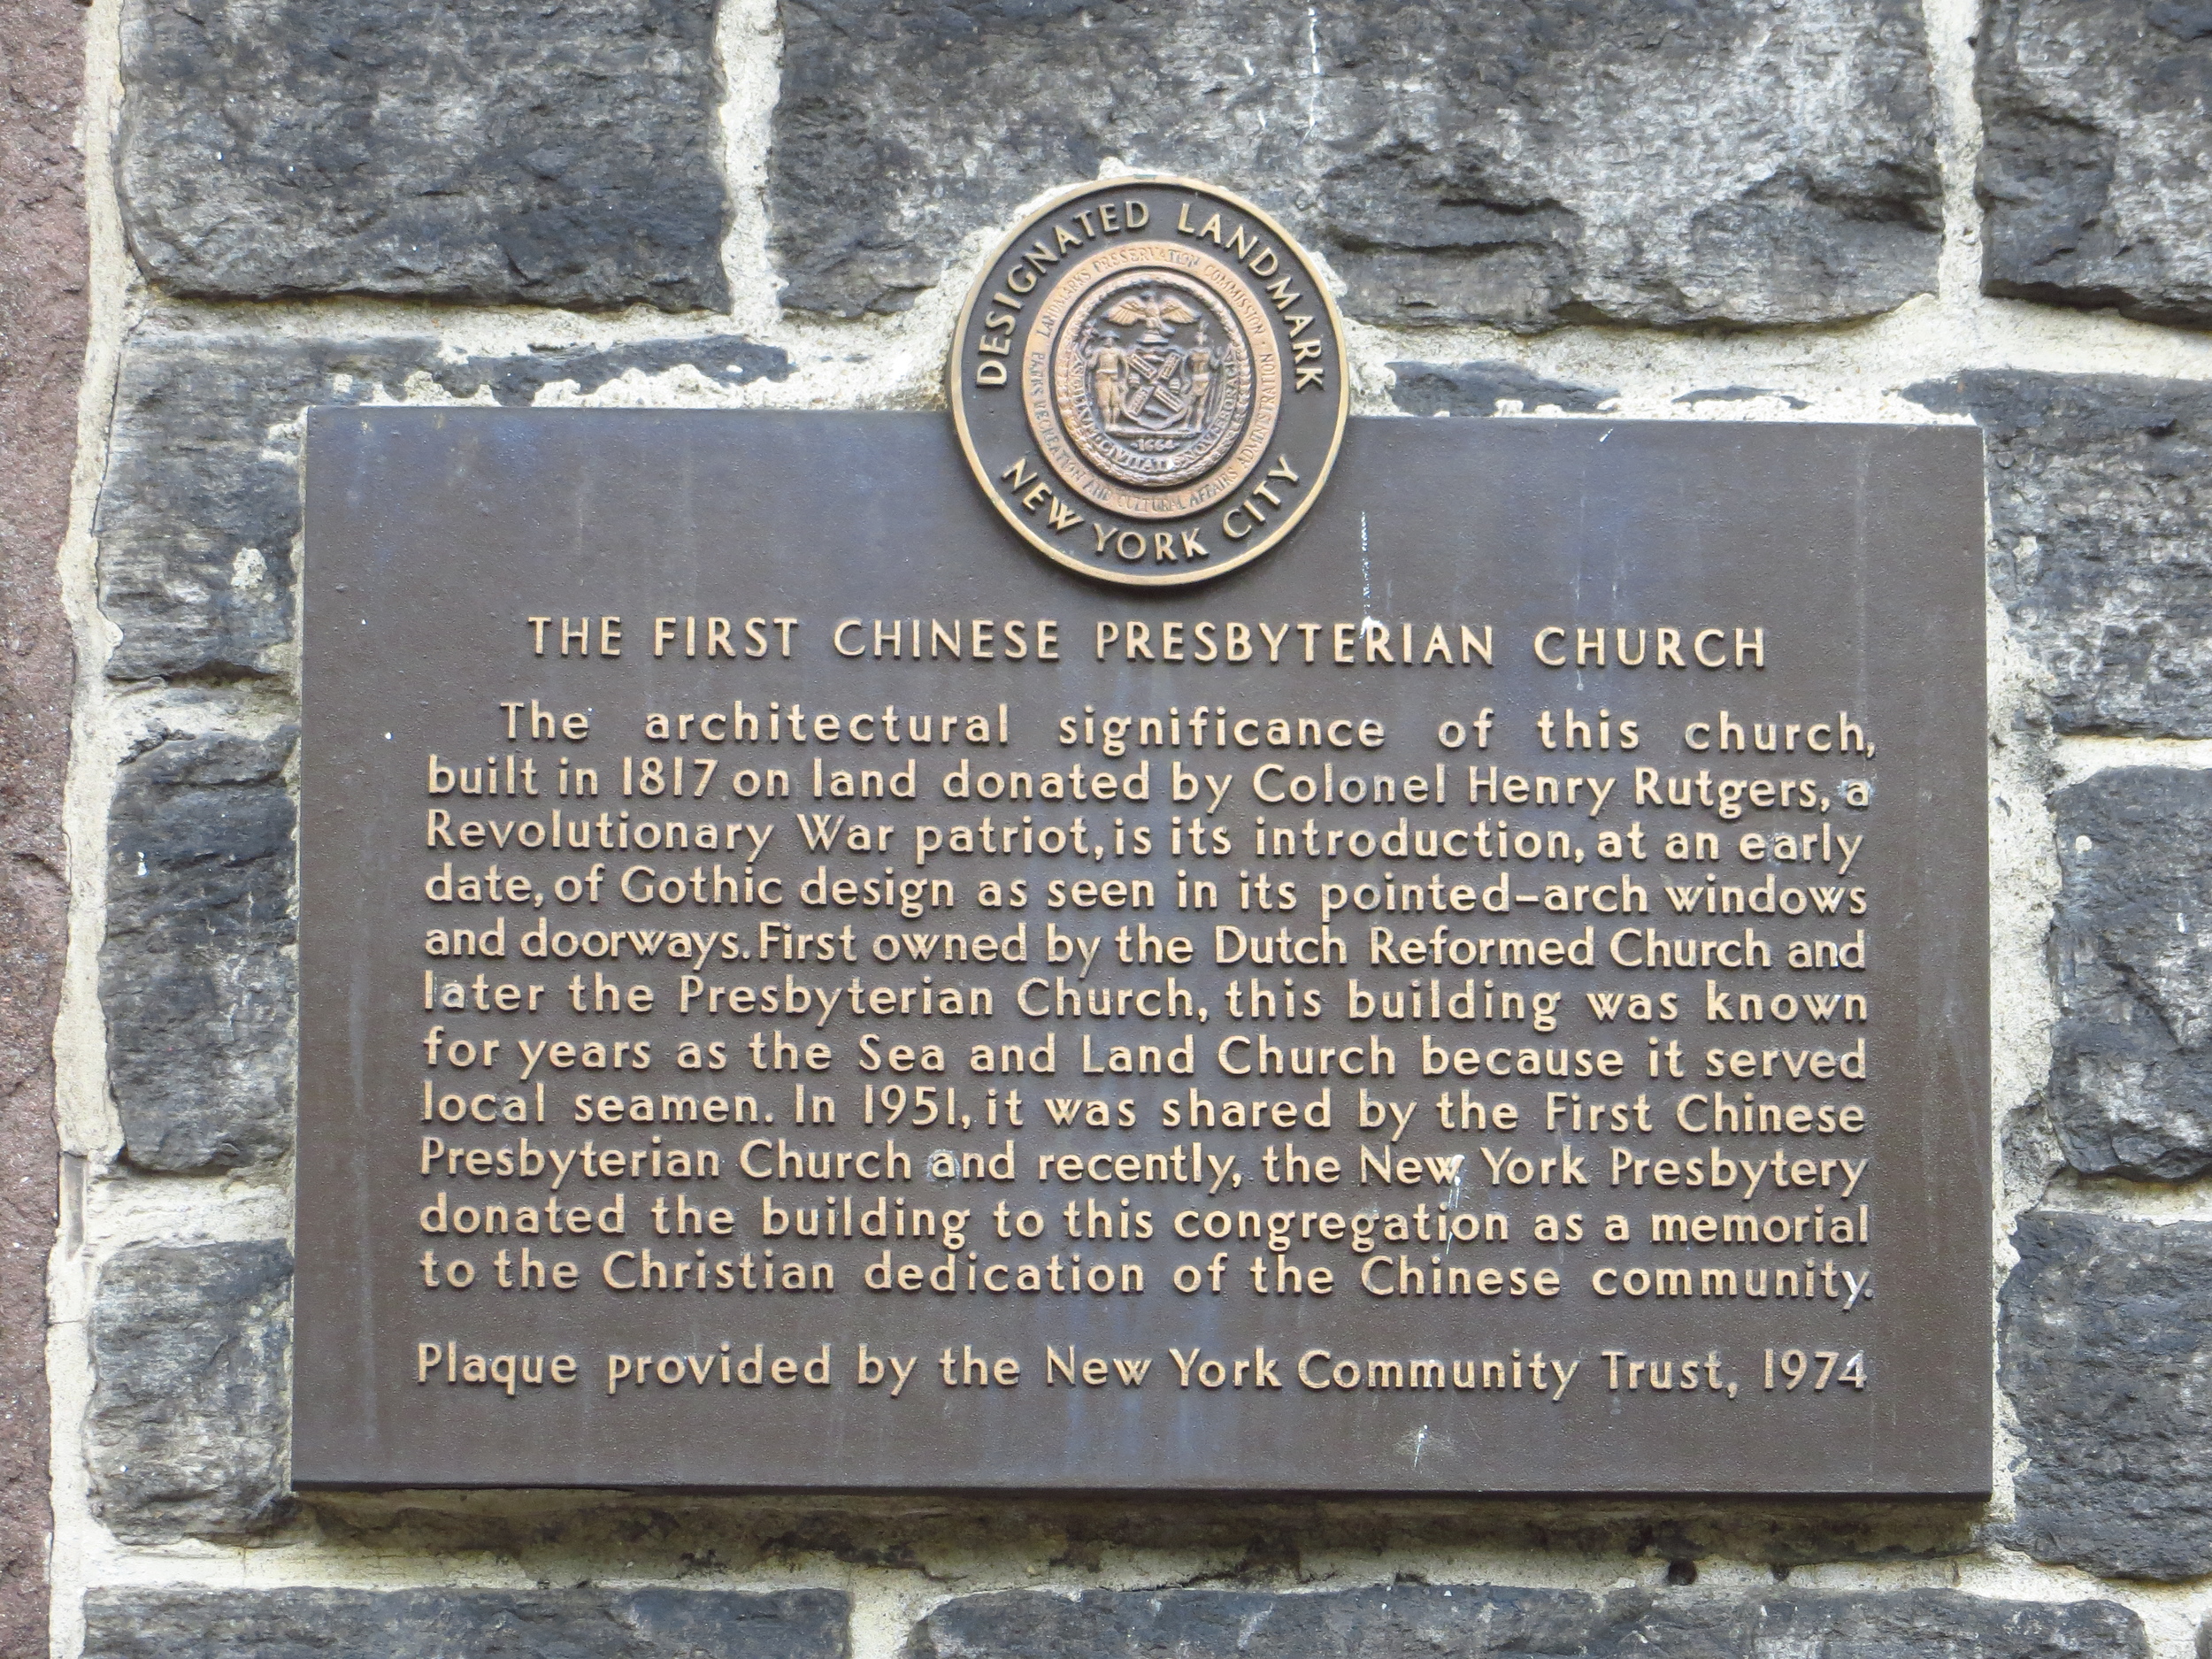 First Chinese Presbyterian Church history